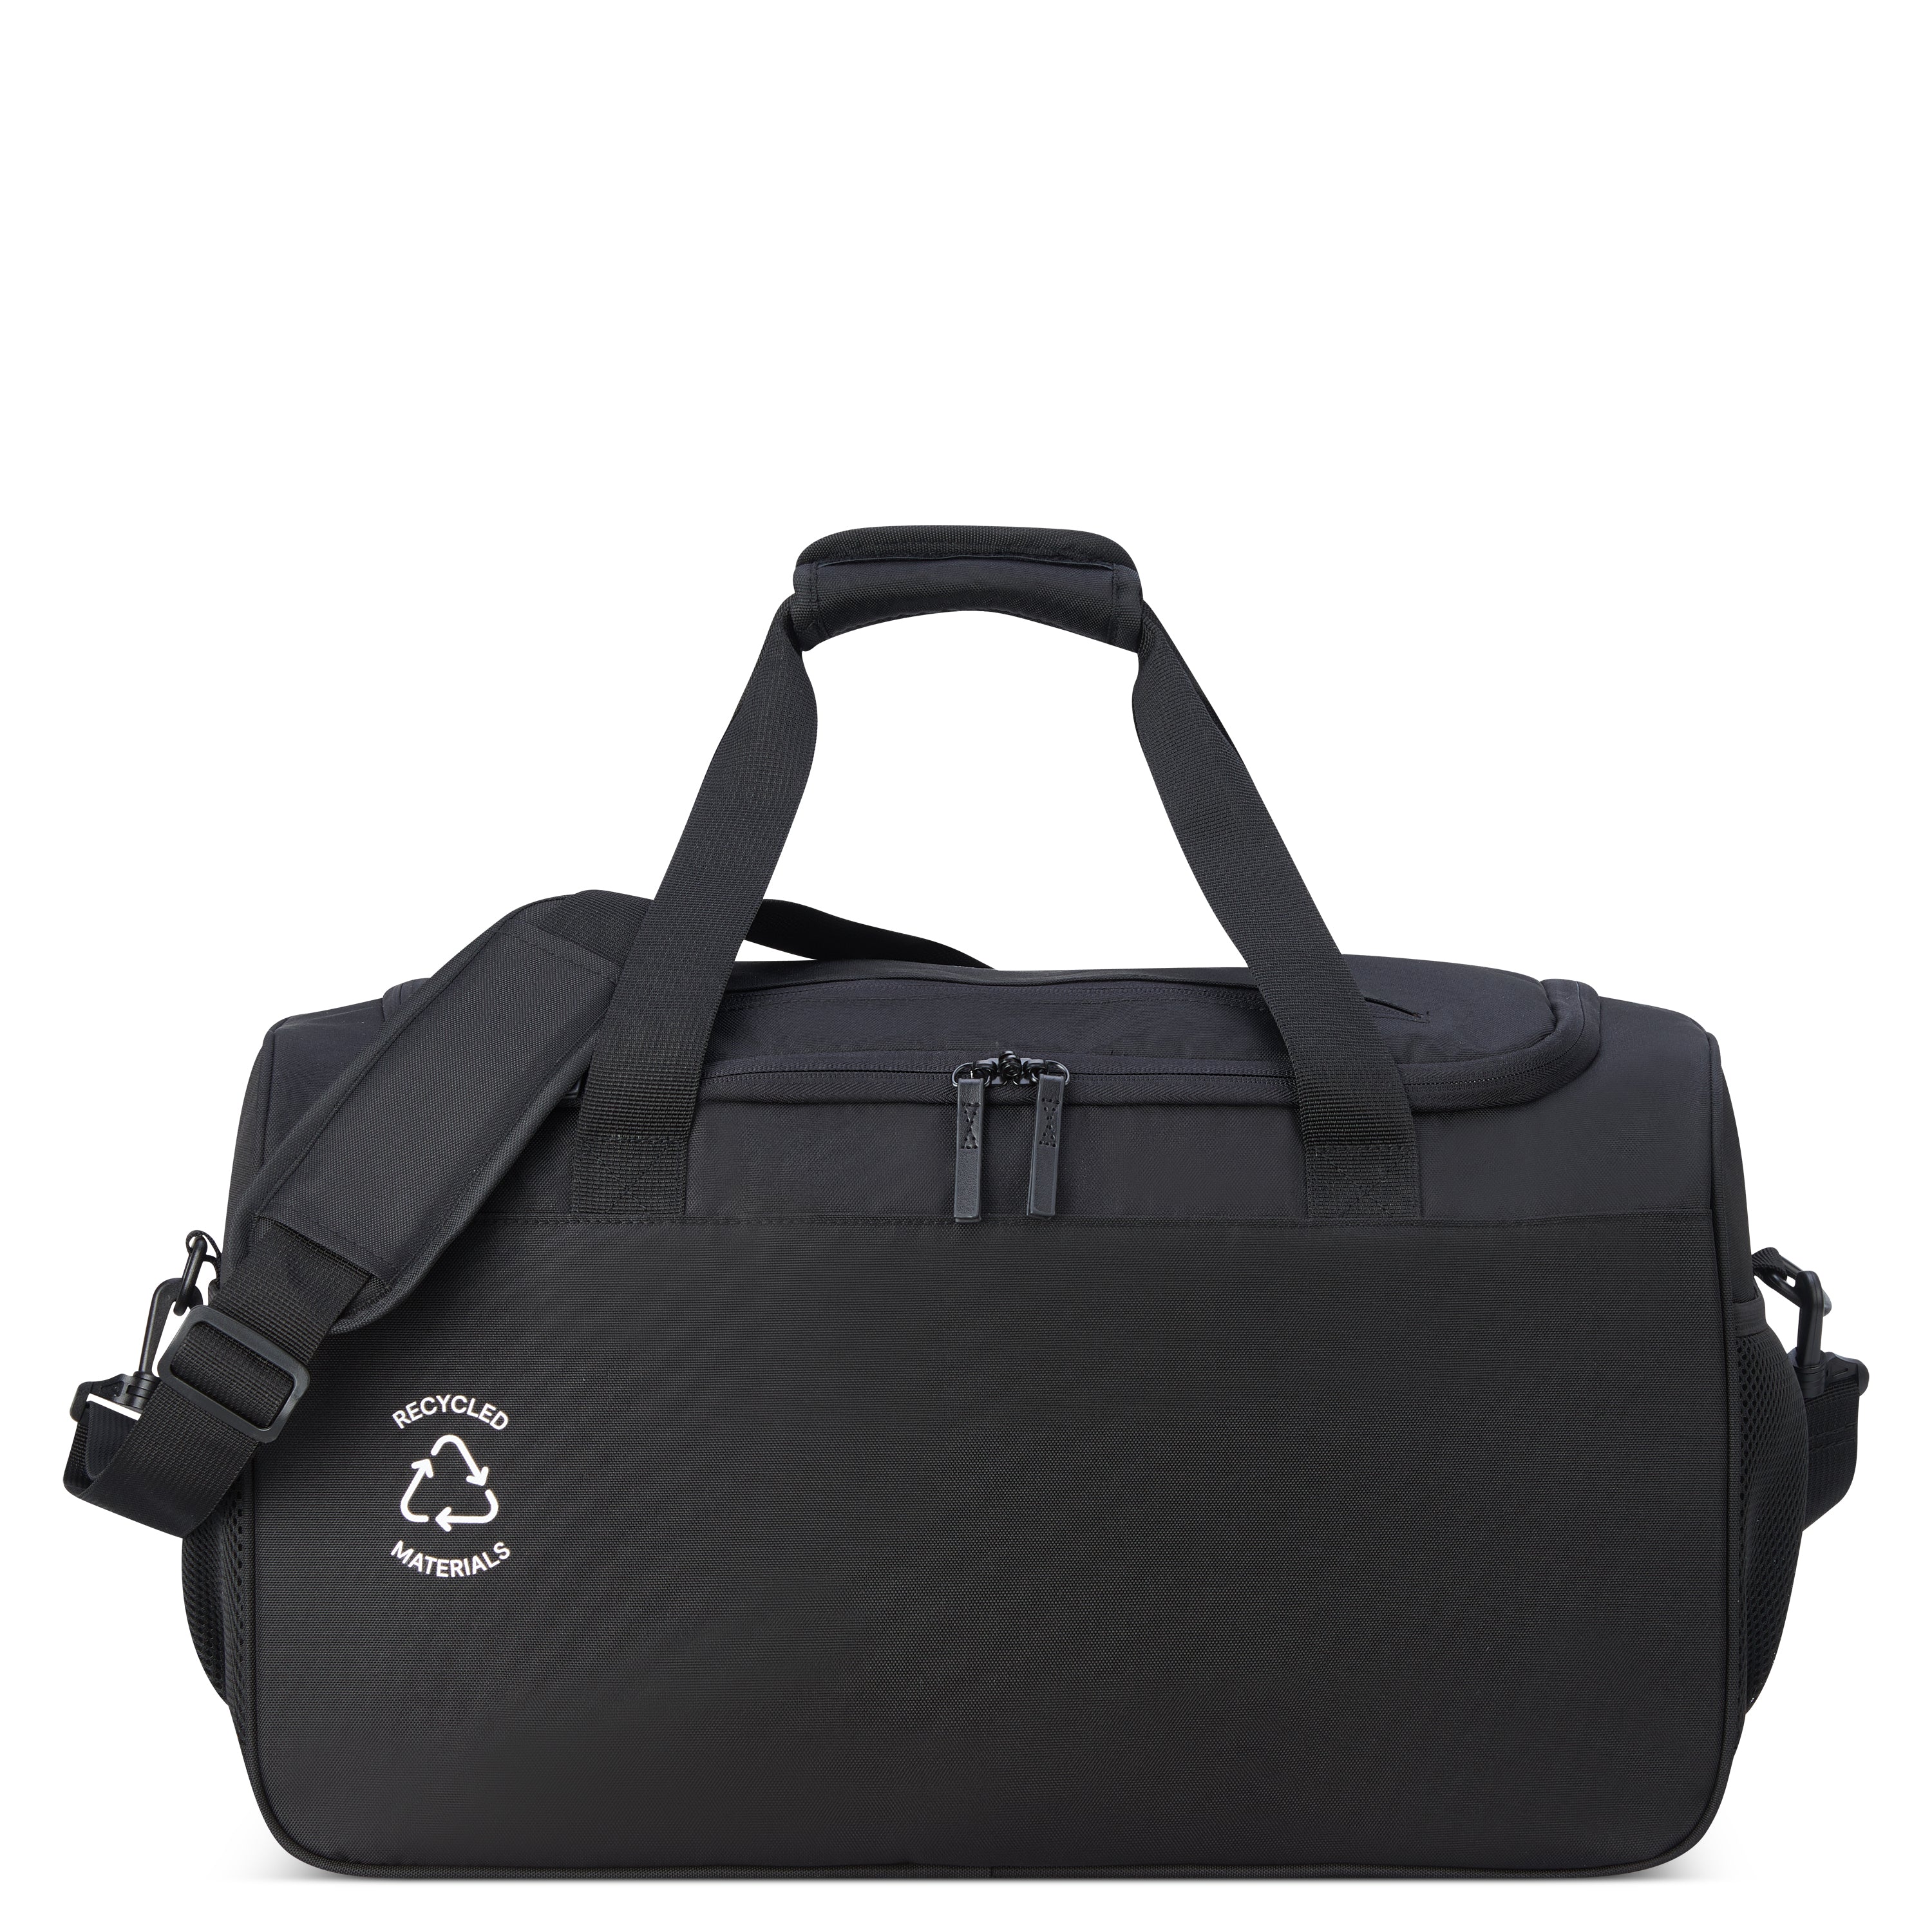 MAUBERT 2.0 - Duffle Bag S (50cm) – DELSEY PARIS INT